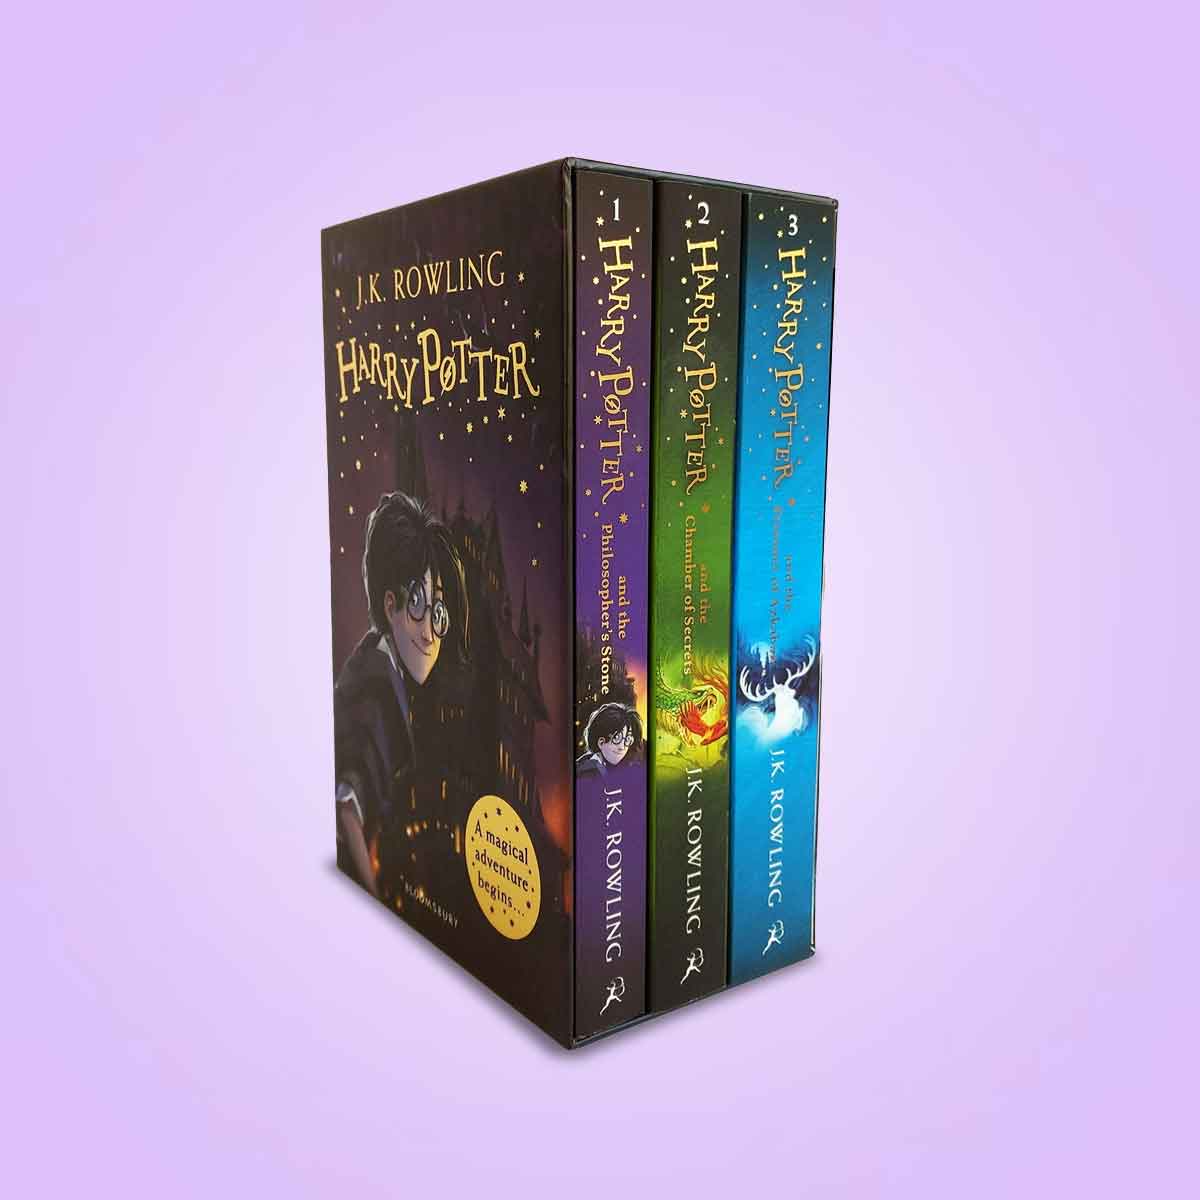 Harry Potter 1-3 Box Set: A Magical Adventure Begins